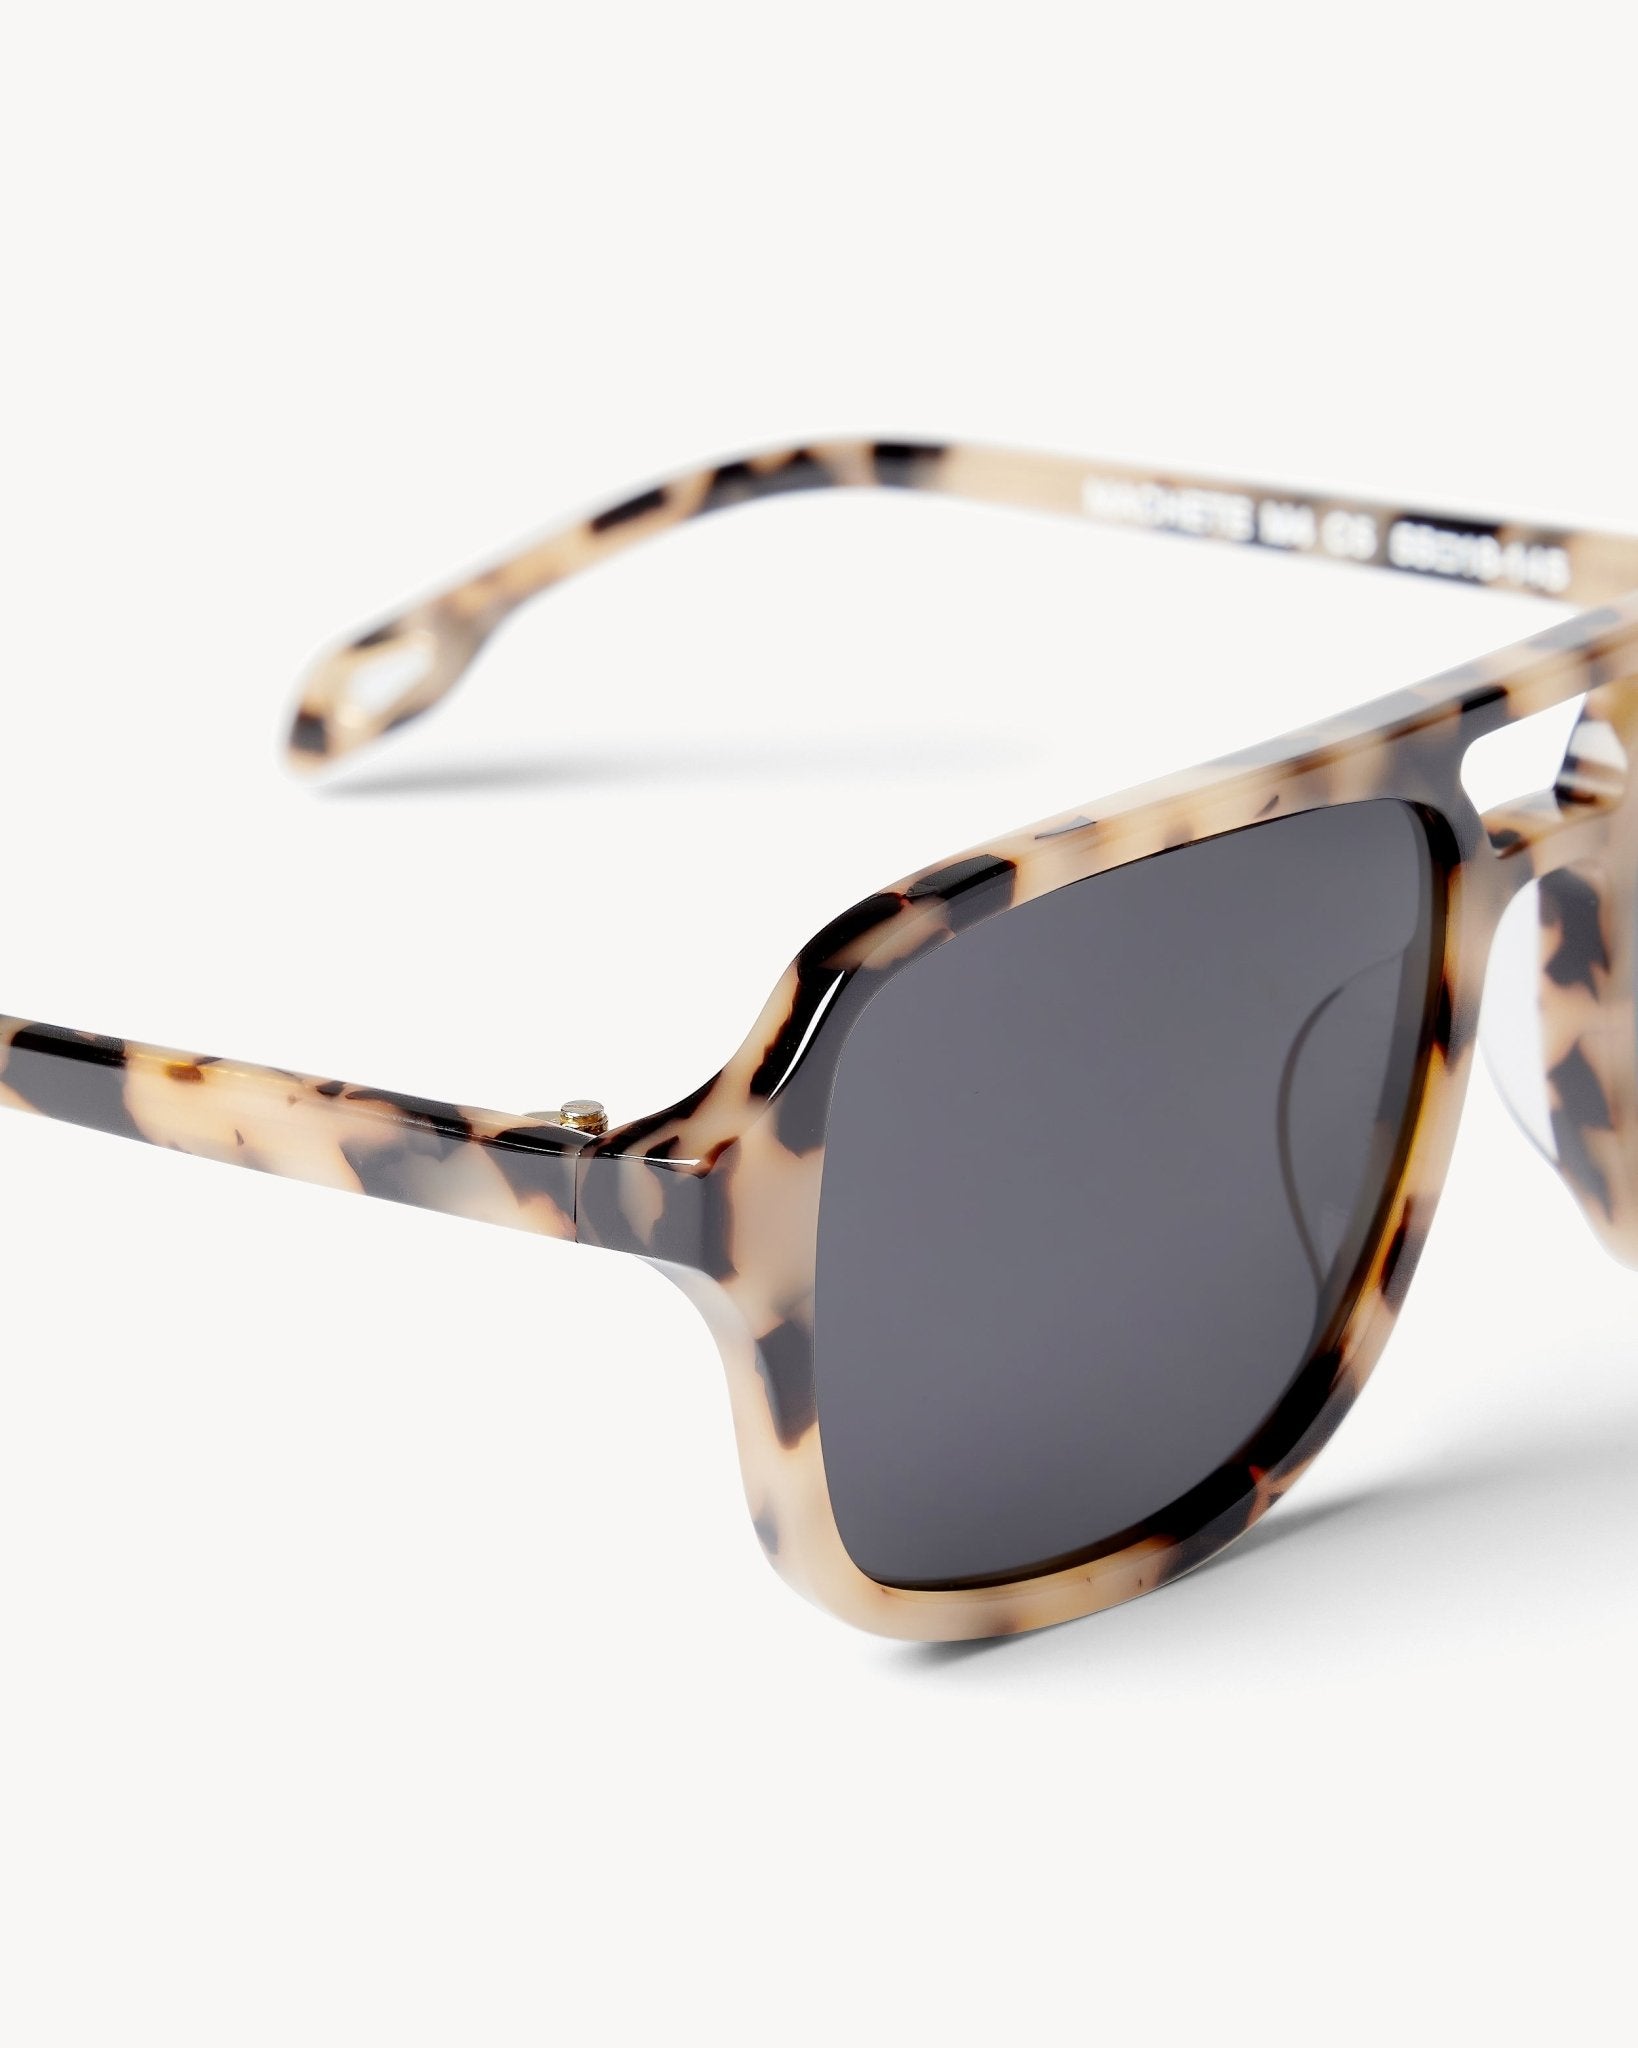 Jane Sunglasses in Blonde Tortoise - MACHETE